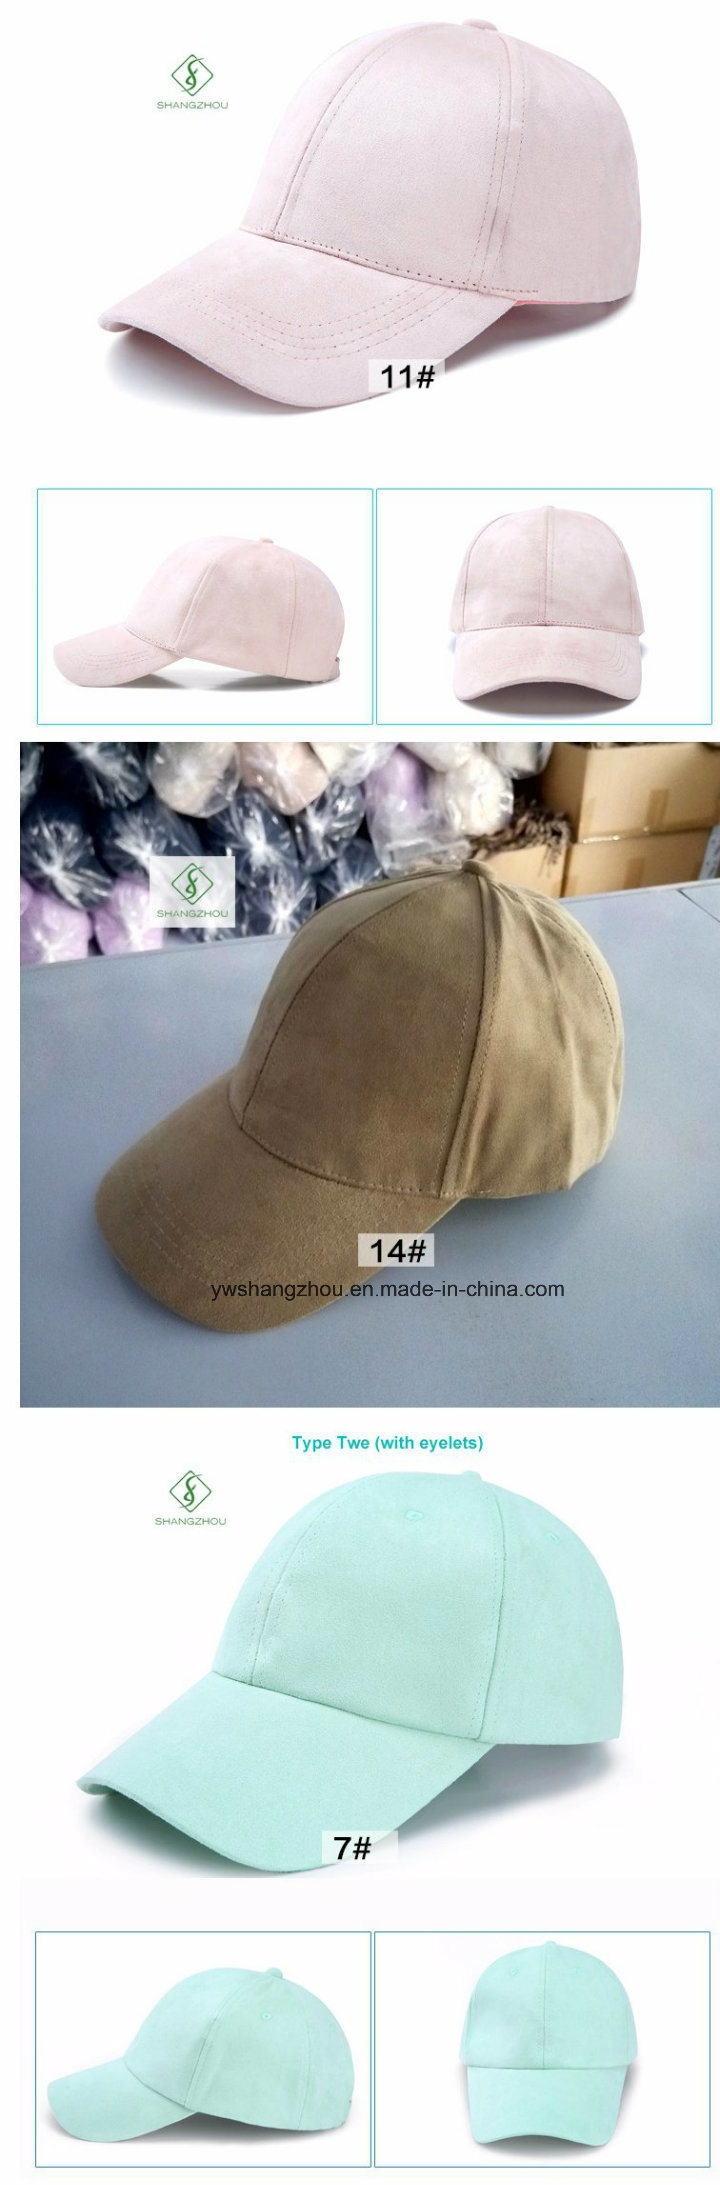 2017 New Korean High-Grade Suede Baseball Cap fashion Peaked Cap